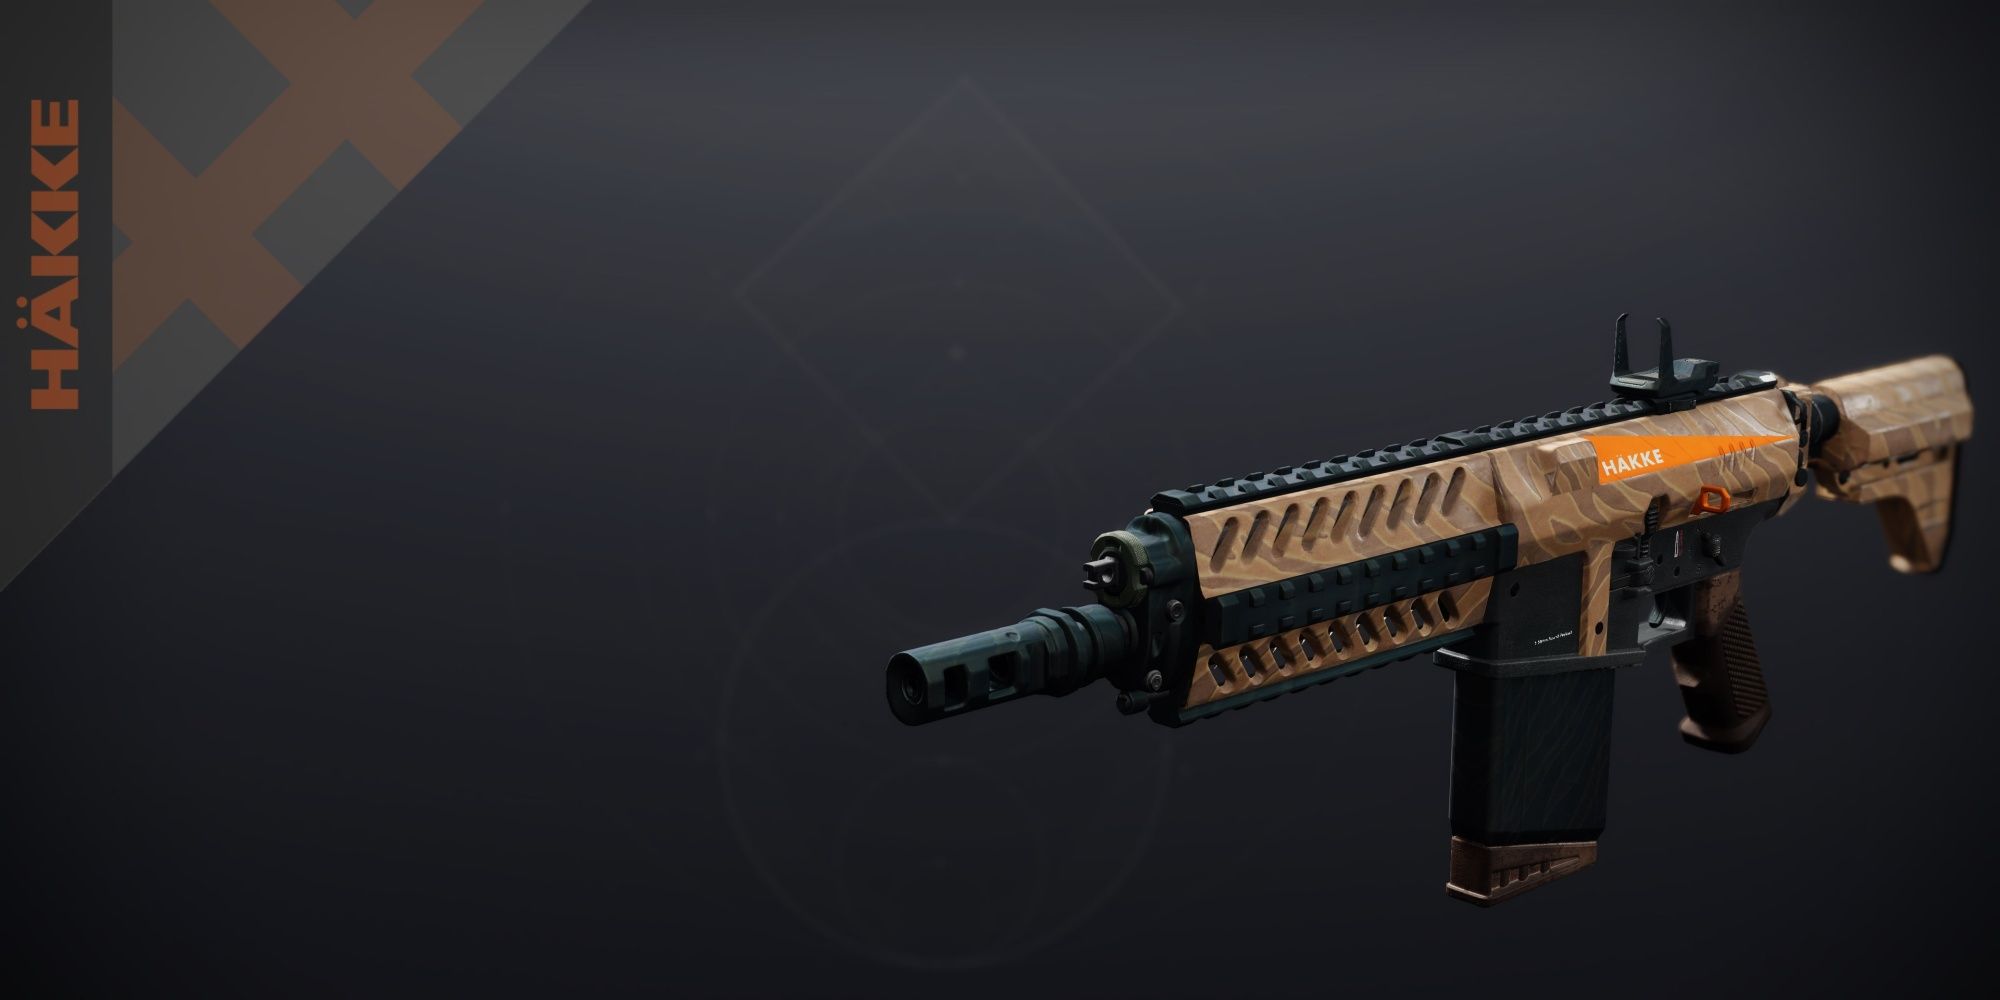 Destiny 2 Lodbrok-C Auto Rifle